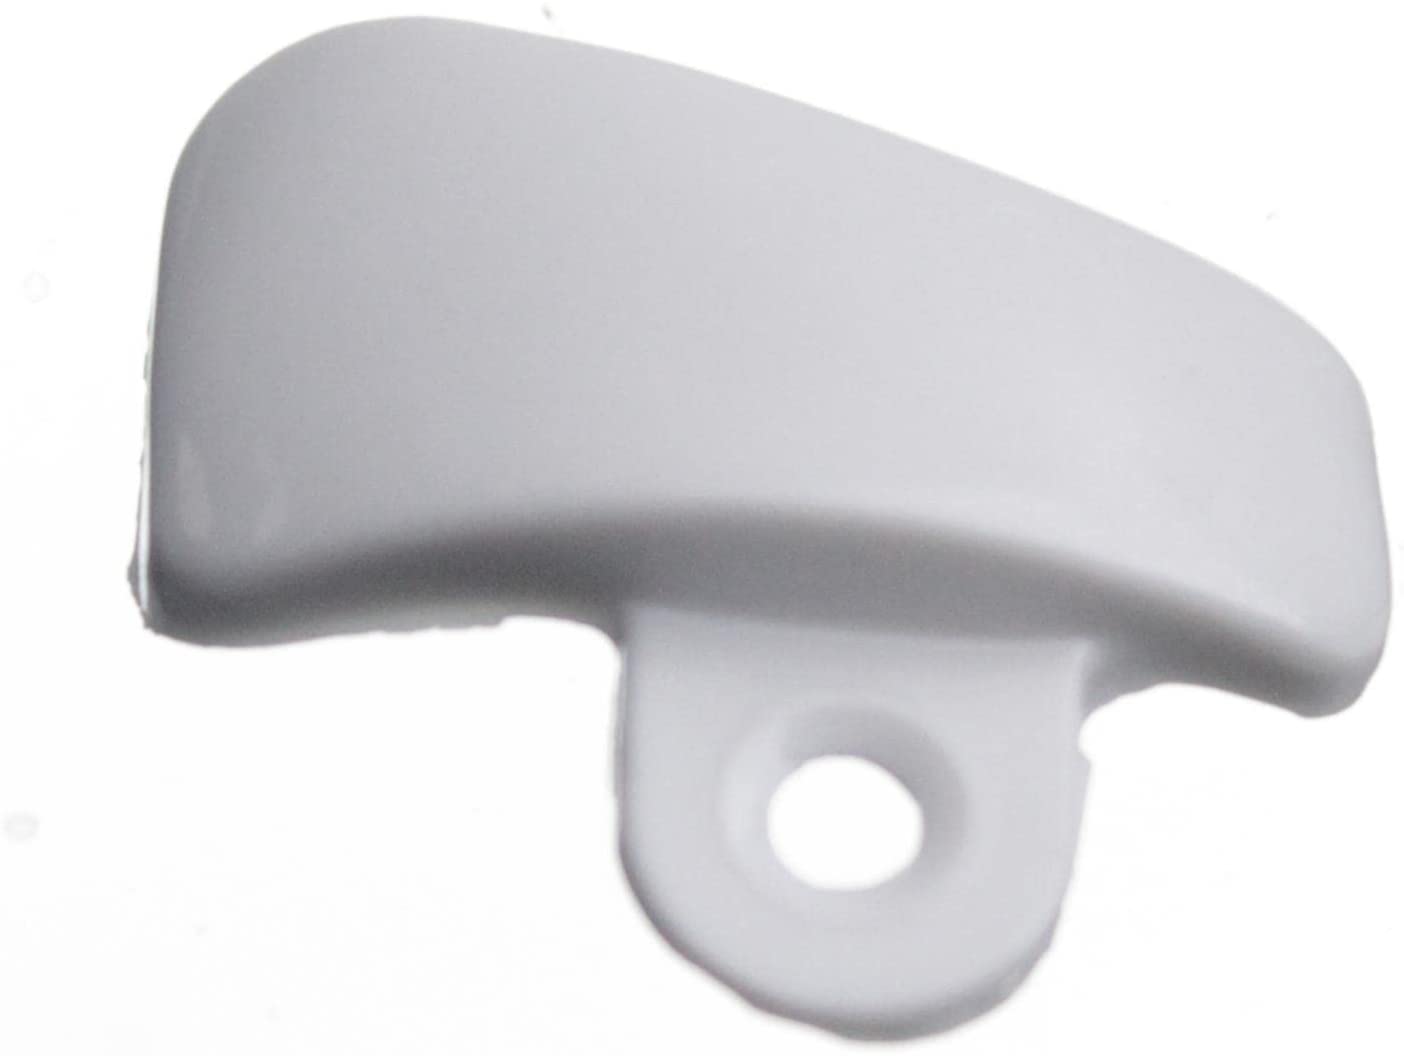 KitchenAid replacement Headlock White / Storm Grey for tilt head mixers